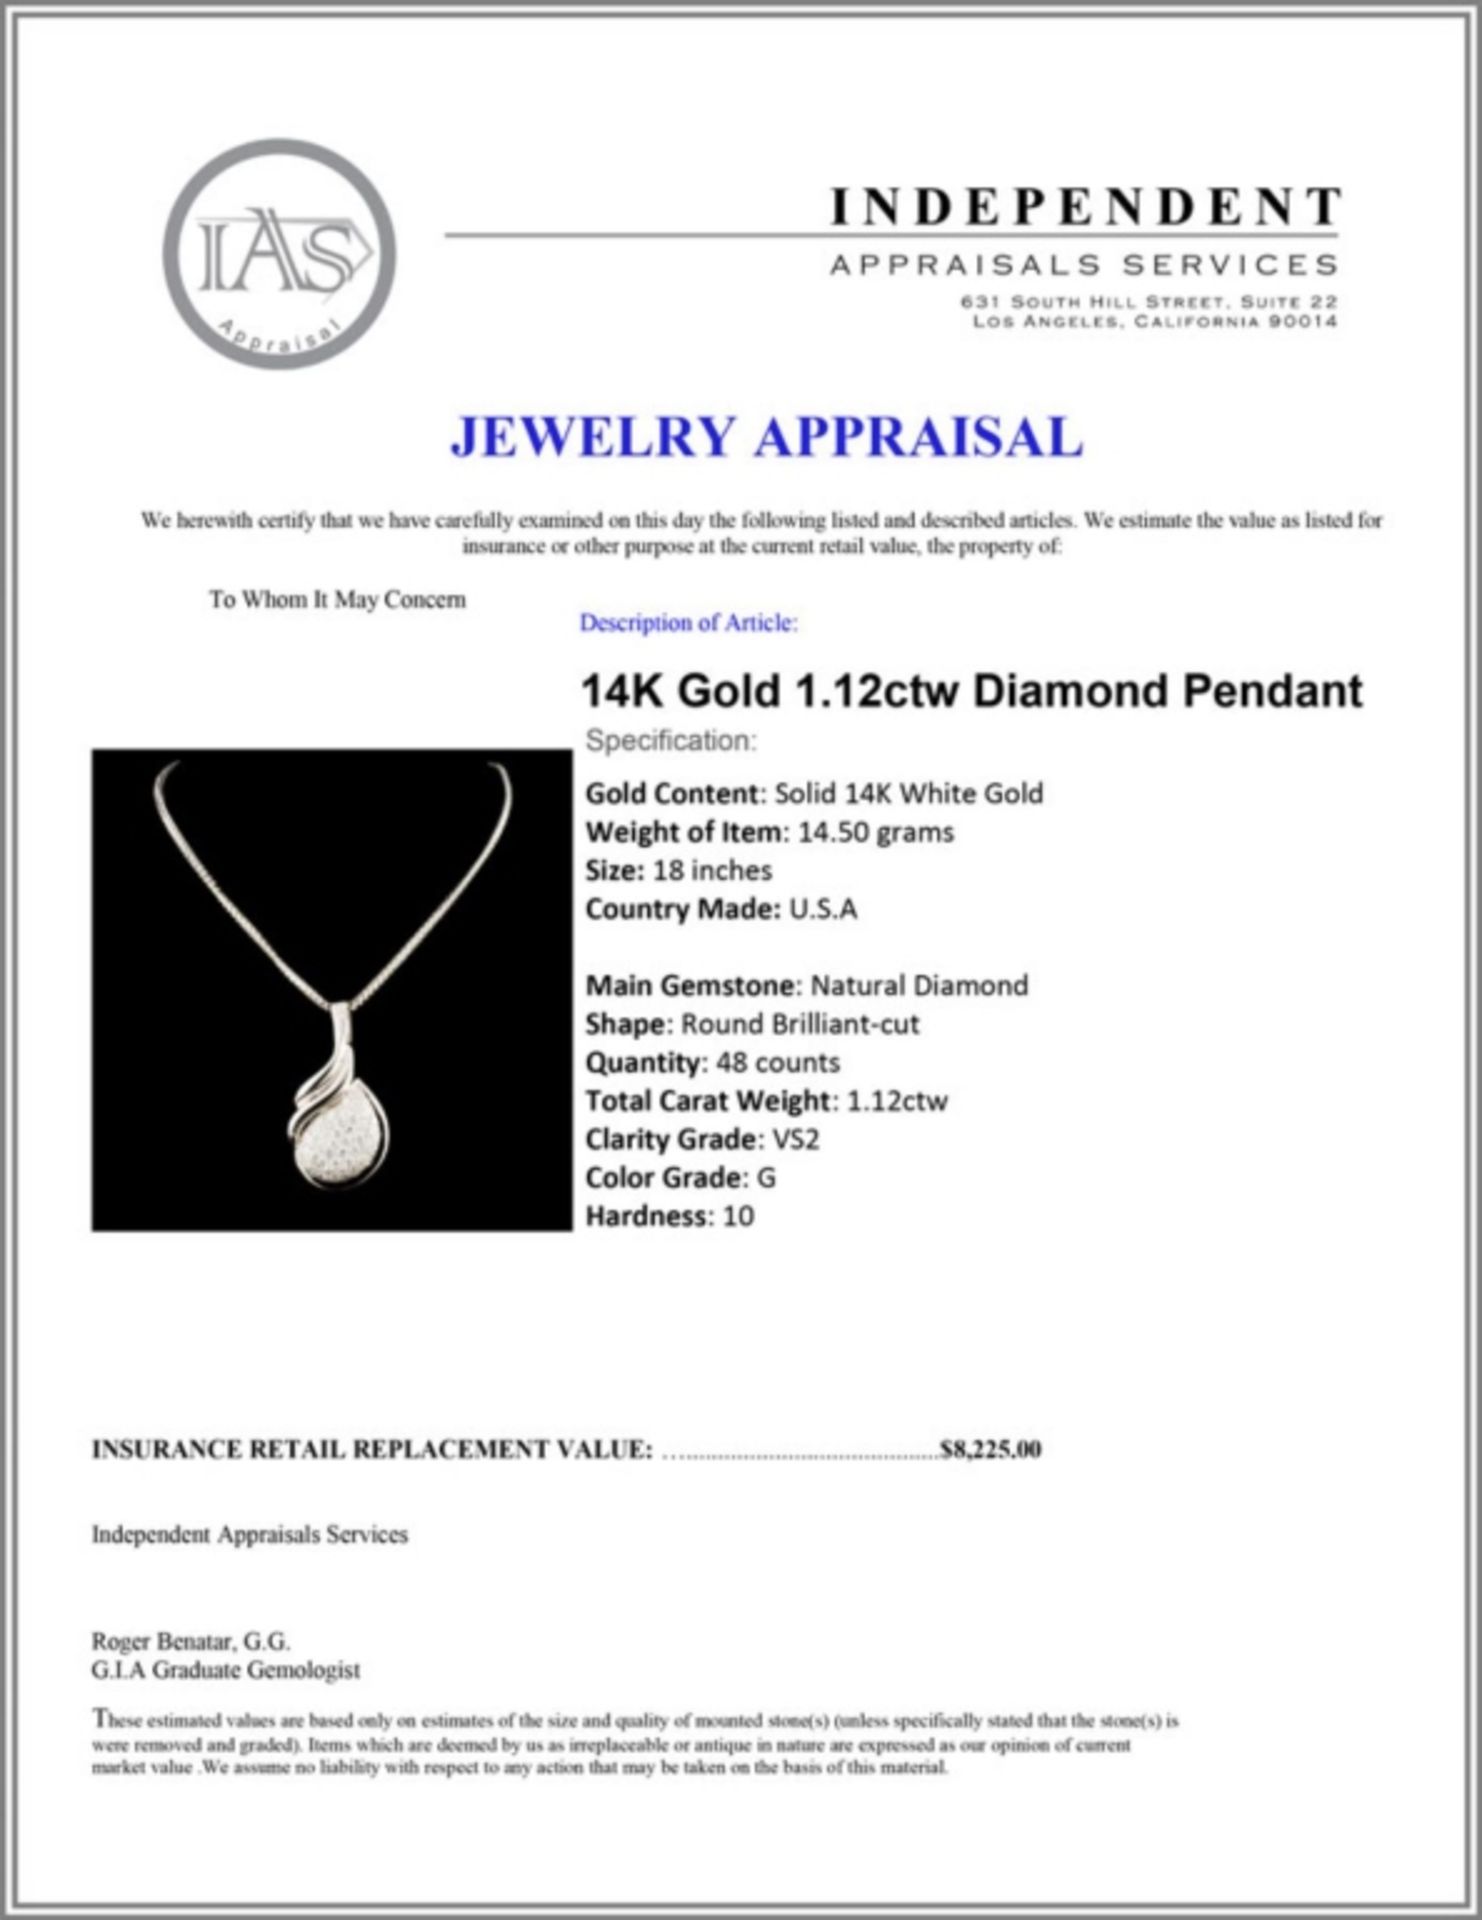 14K Gold 1.12ctw Diamond Pendant - Image 4 of 4